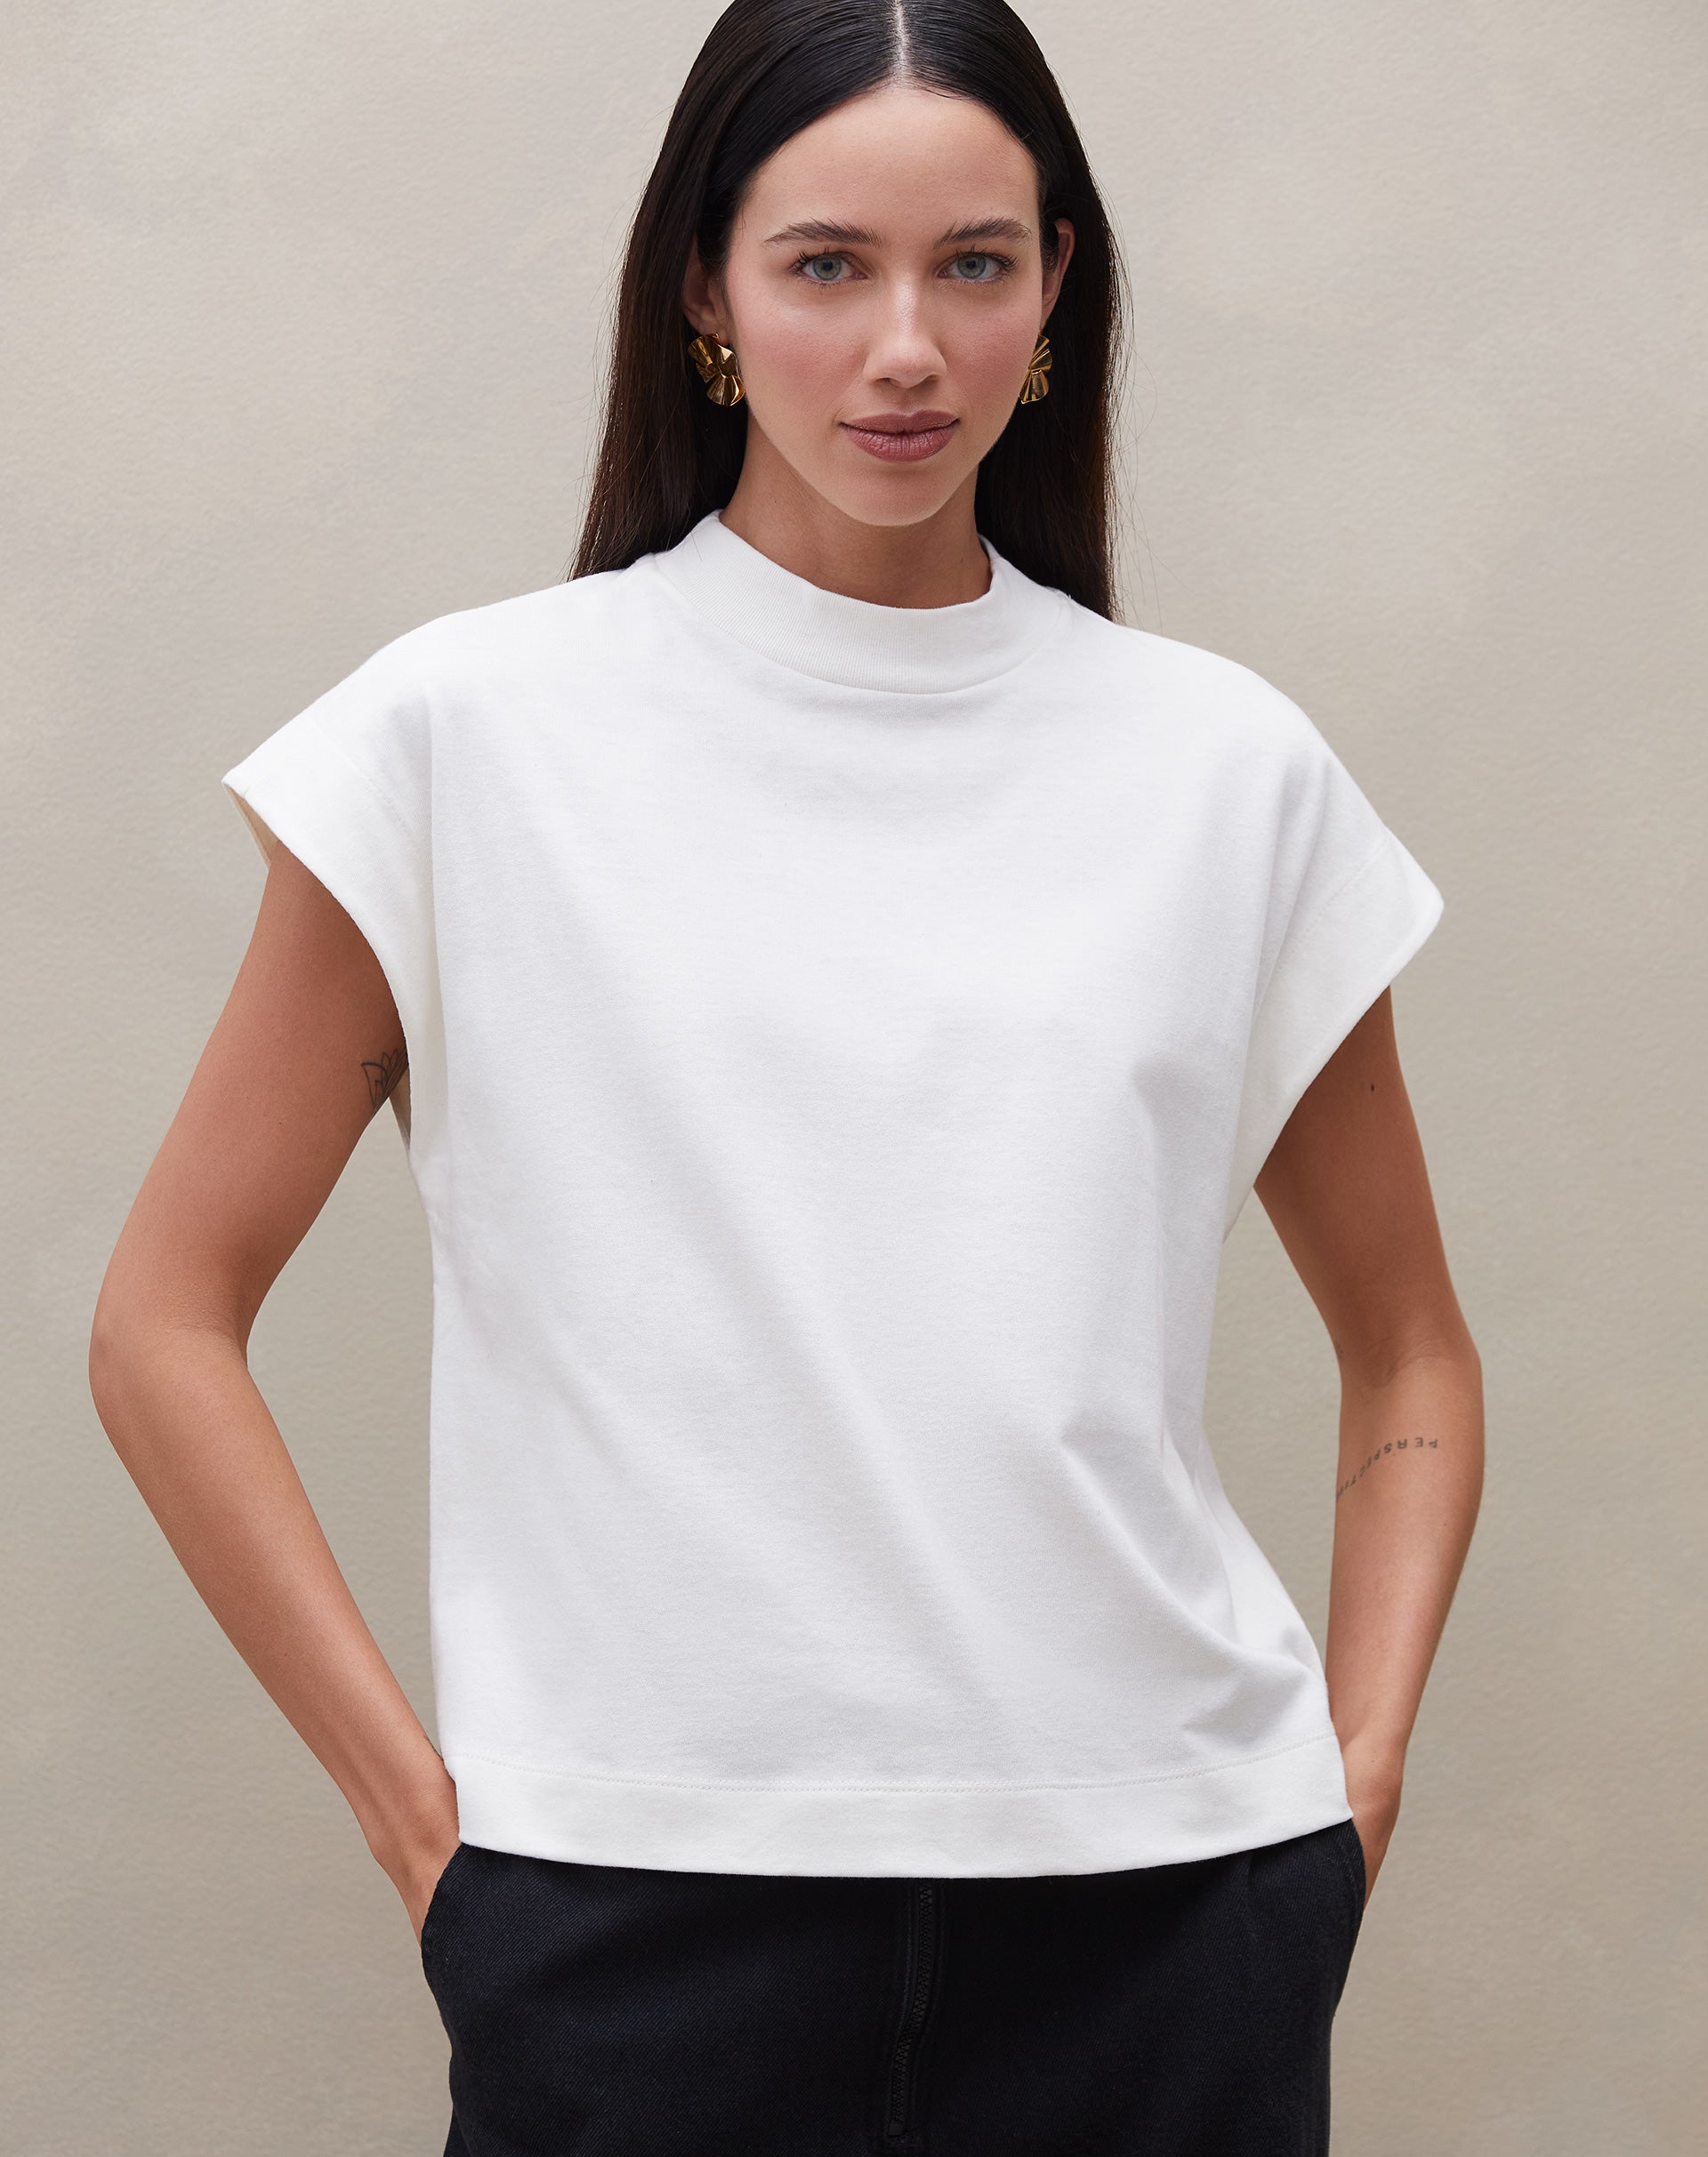 Camiseta de Malha sem Cava Gola Média - Off-white